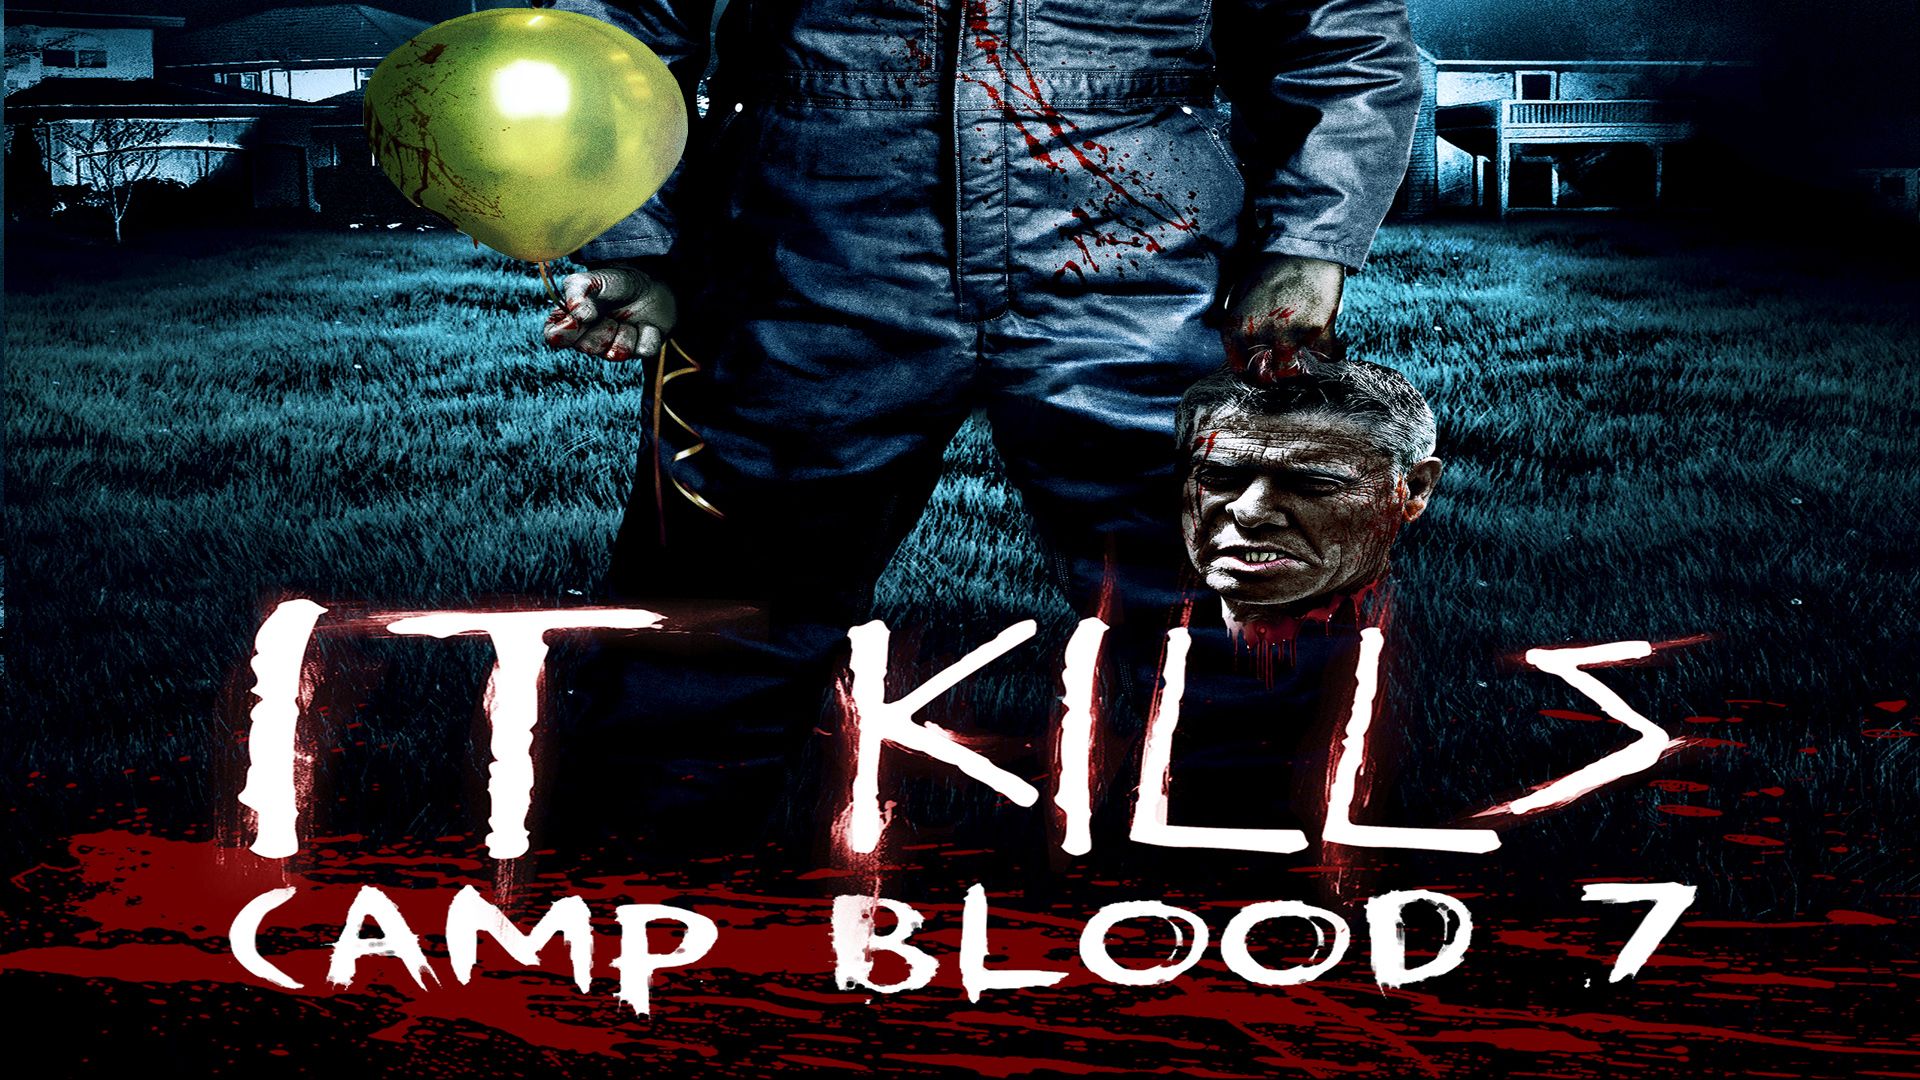 It Kills: Camp Blood 7 Backdrop